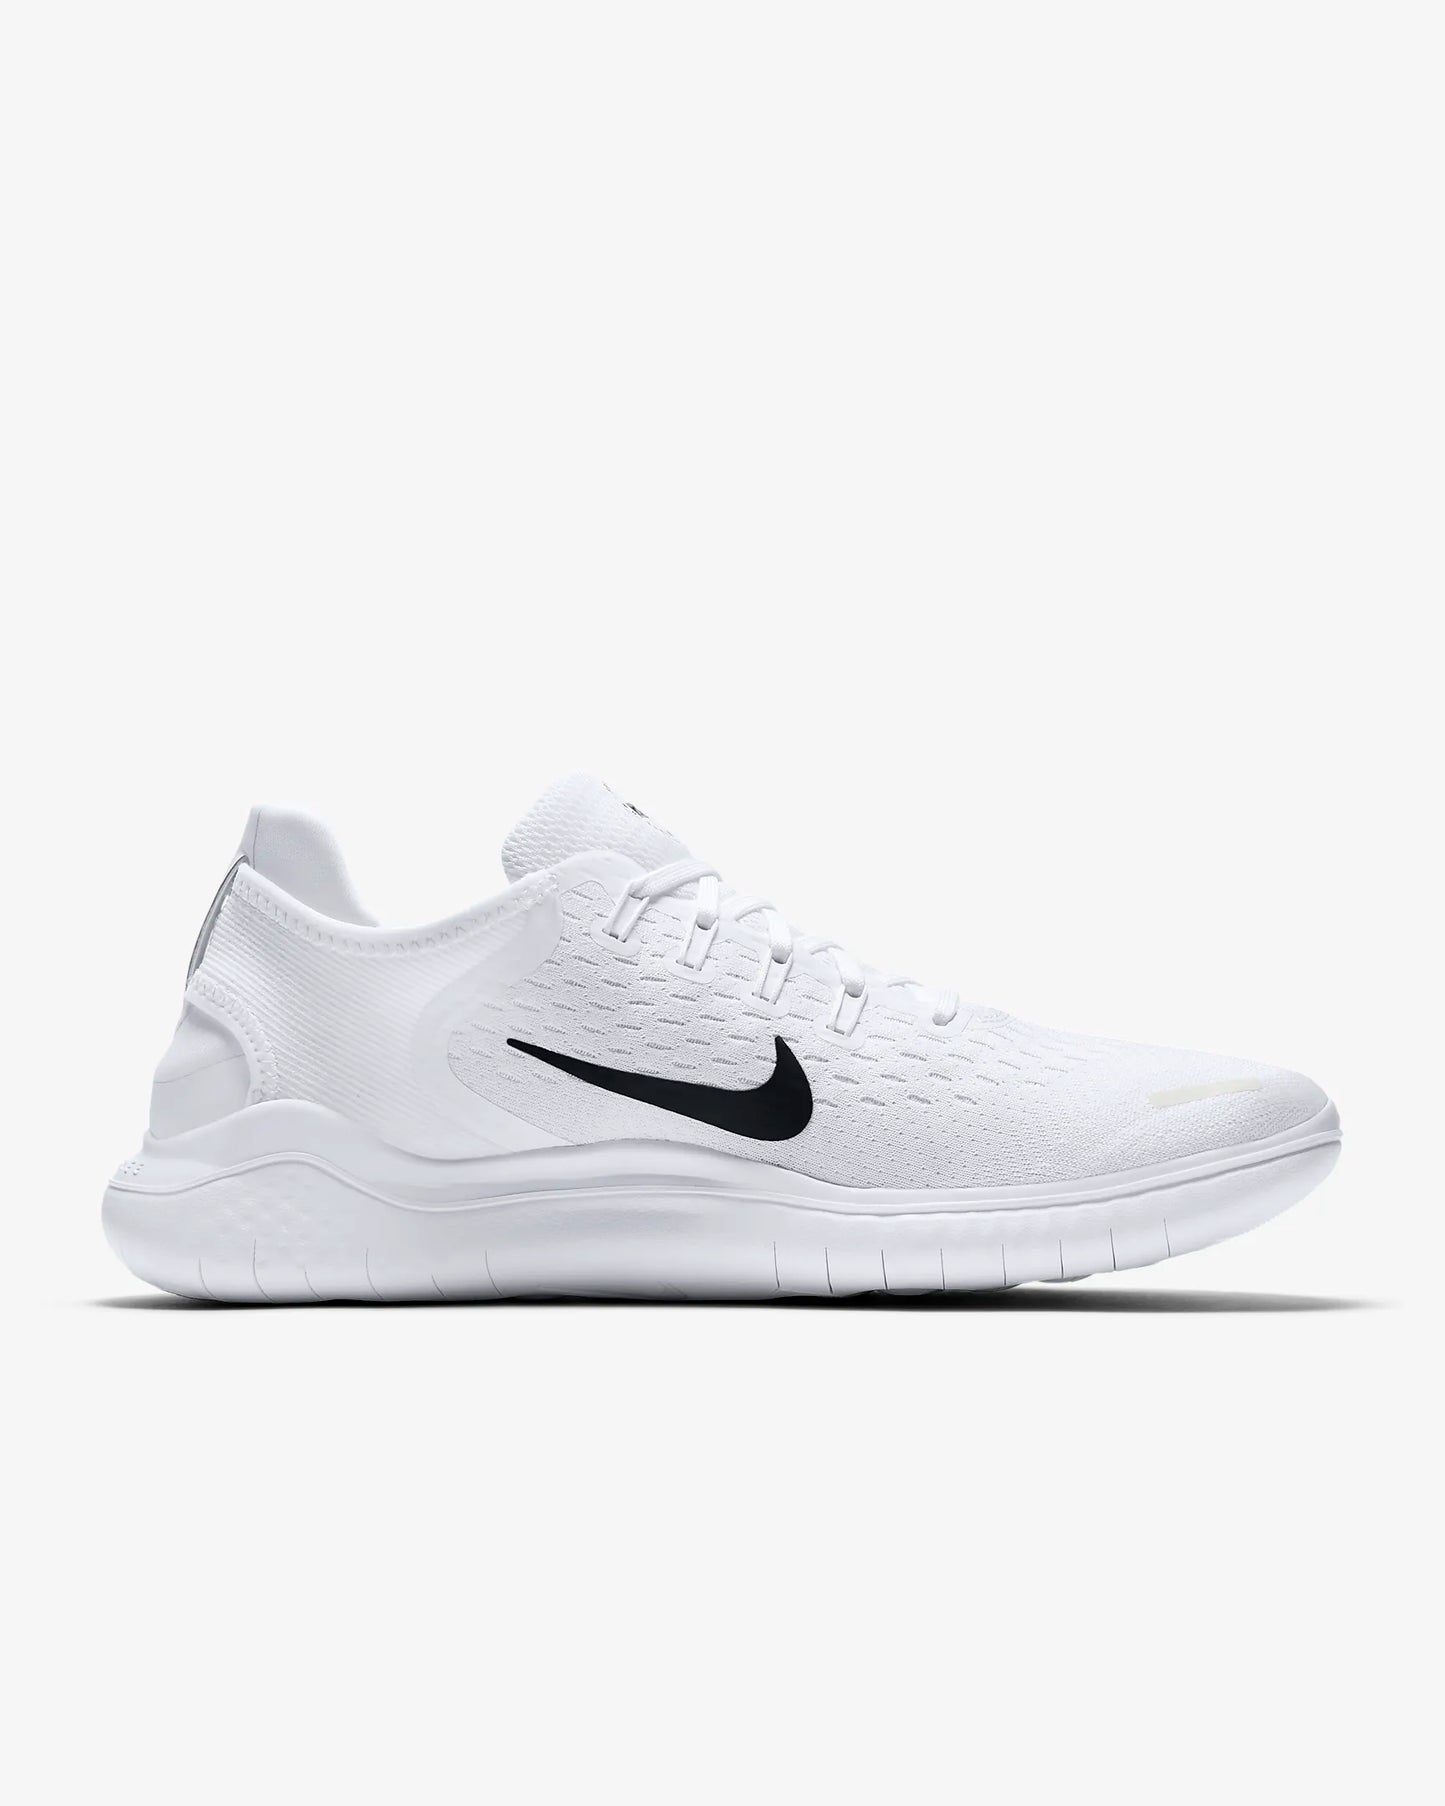 Nike Men's Free Run 2018, White/Black